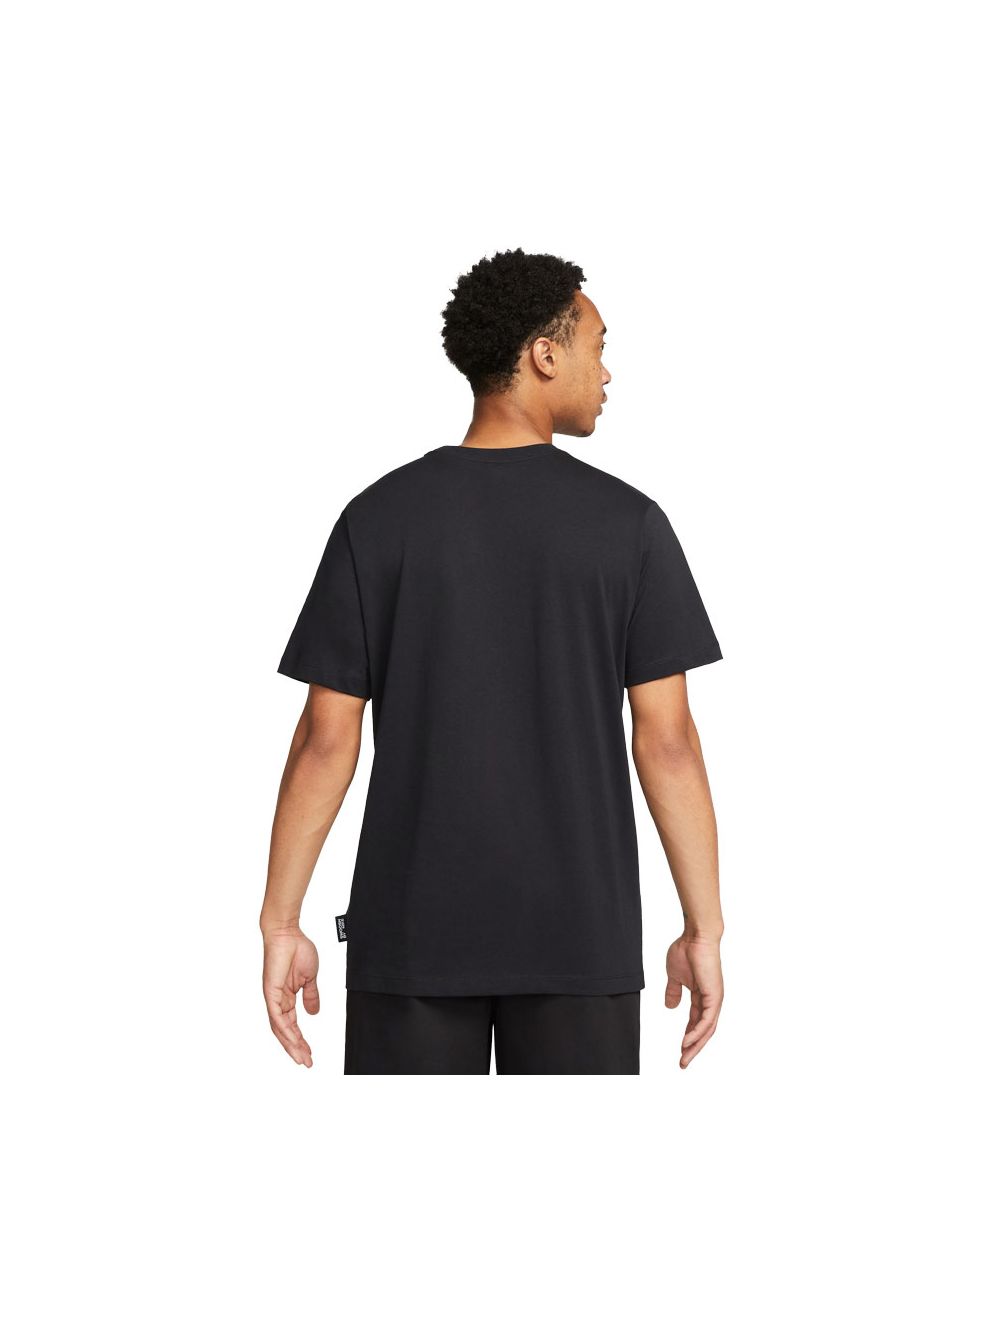 Nike Sportswear Big Swoosh Mens T-Shirt in Black